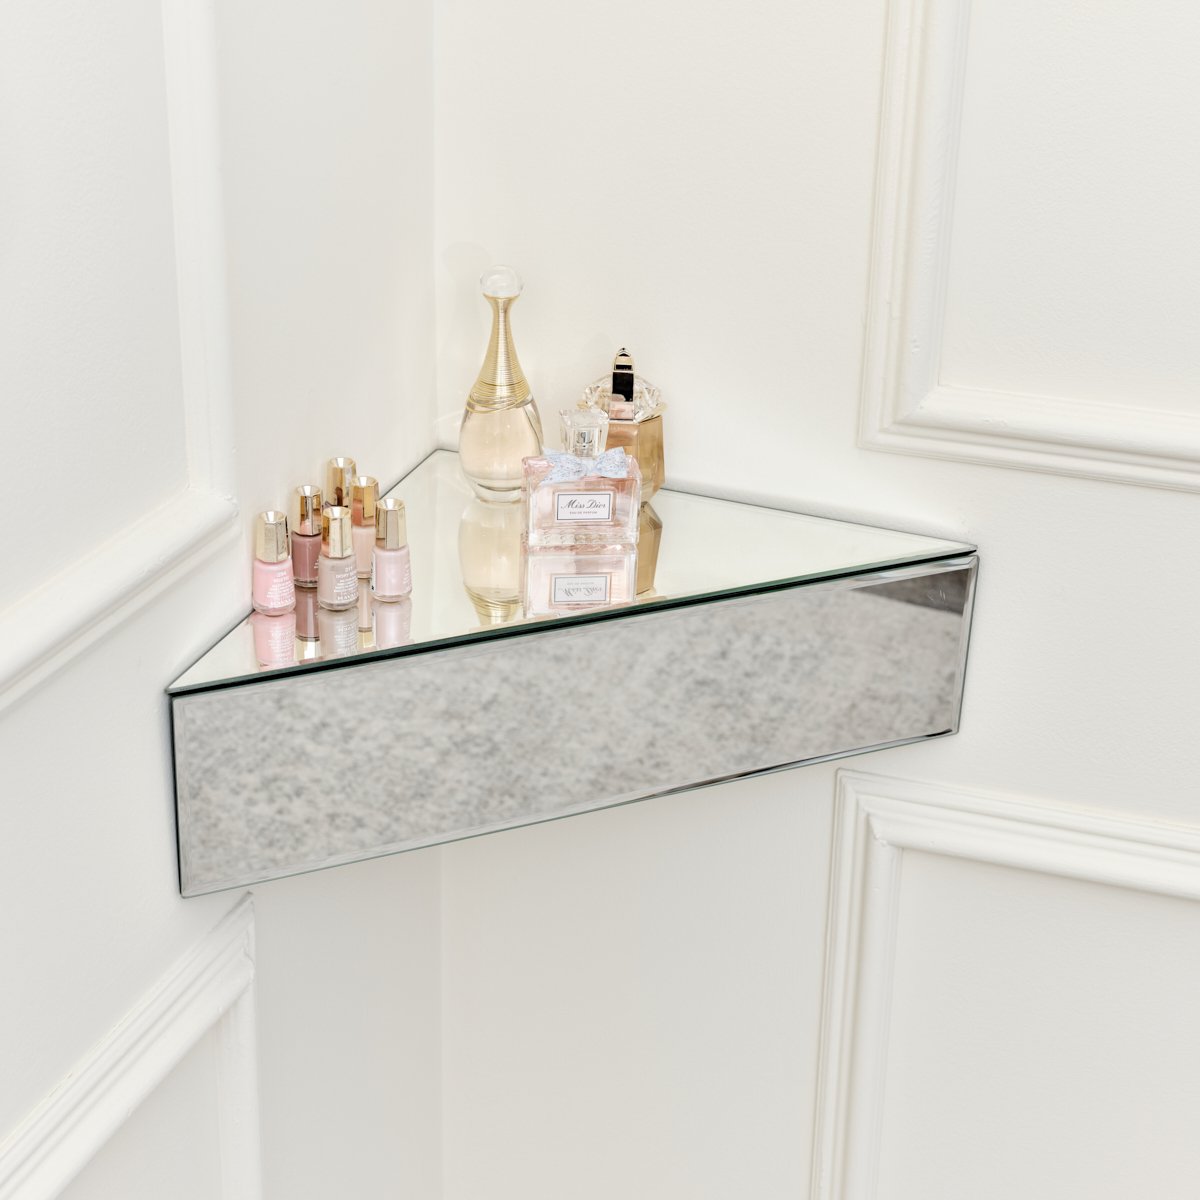 Mirrored Floating One Drawer Corner Shelf / Dressing Table